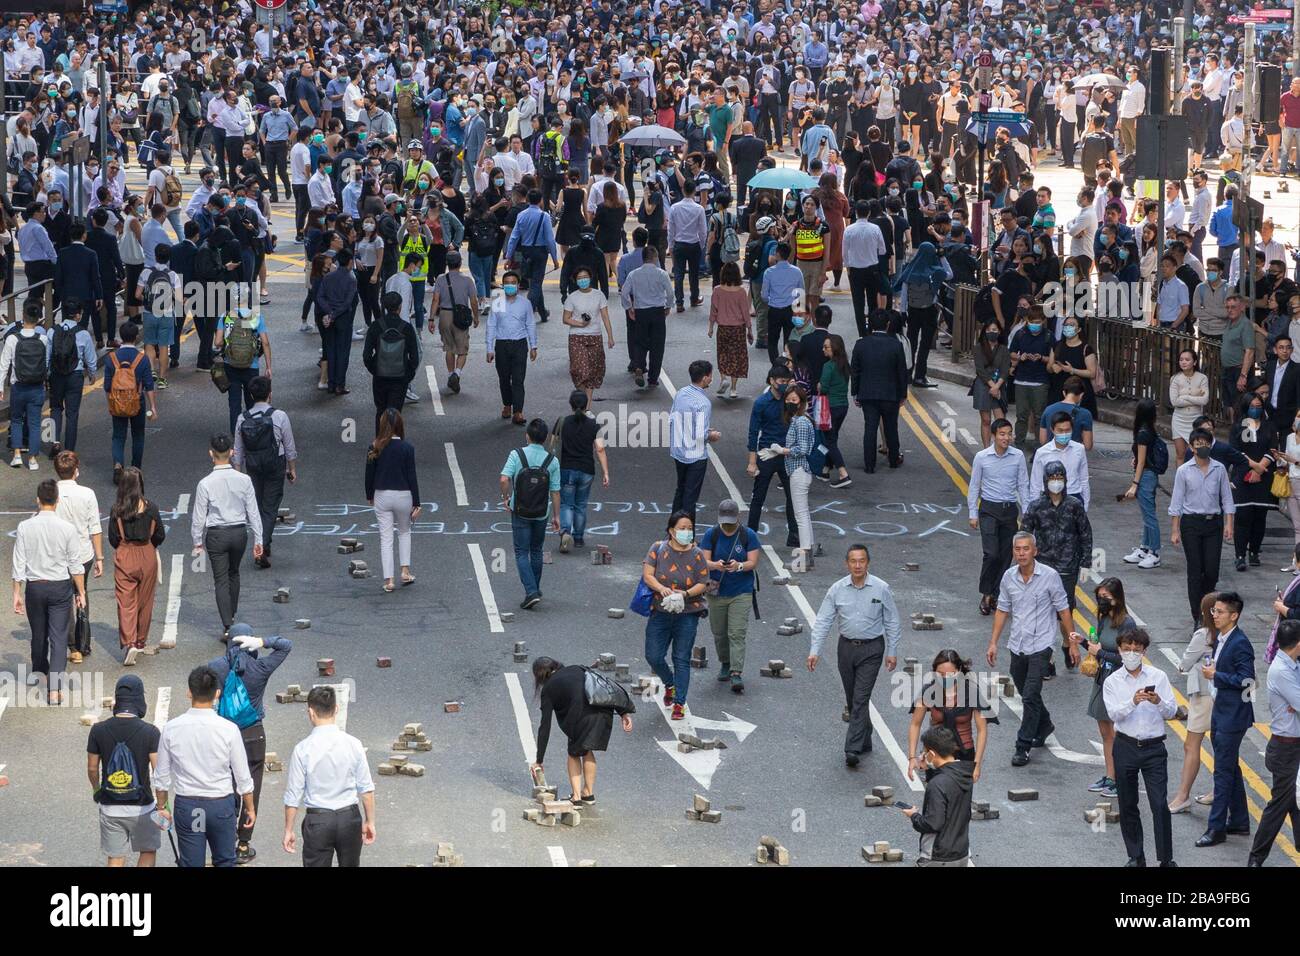 Crowd gathers at the Hong Kong Protest in Central, Hong Kong 10.11.2019 Stock Photo